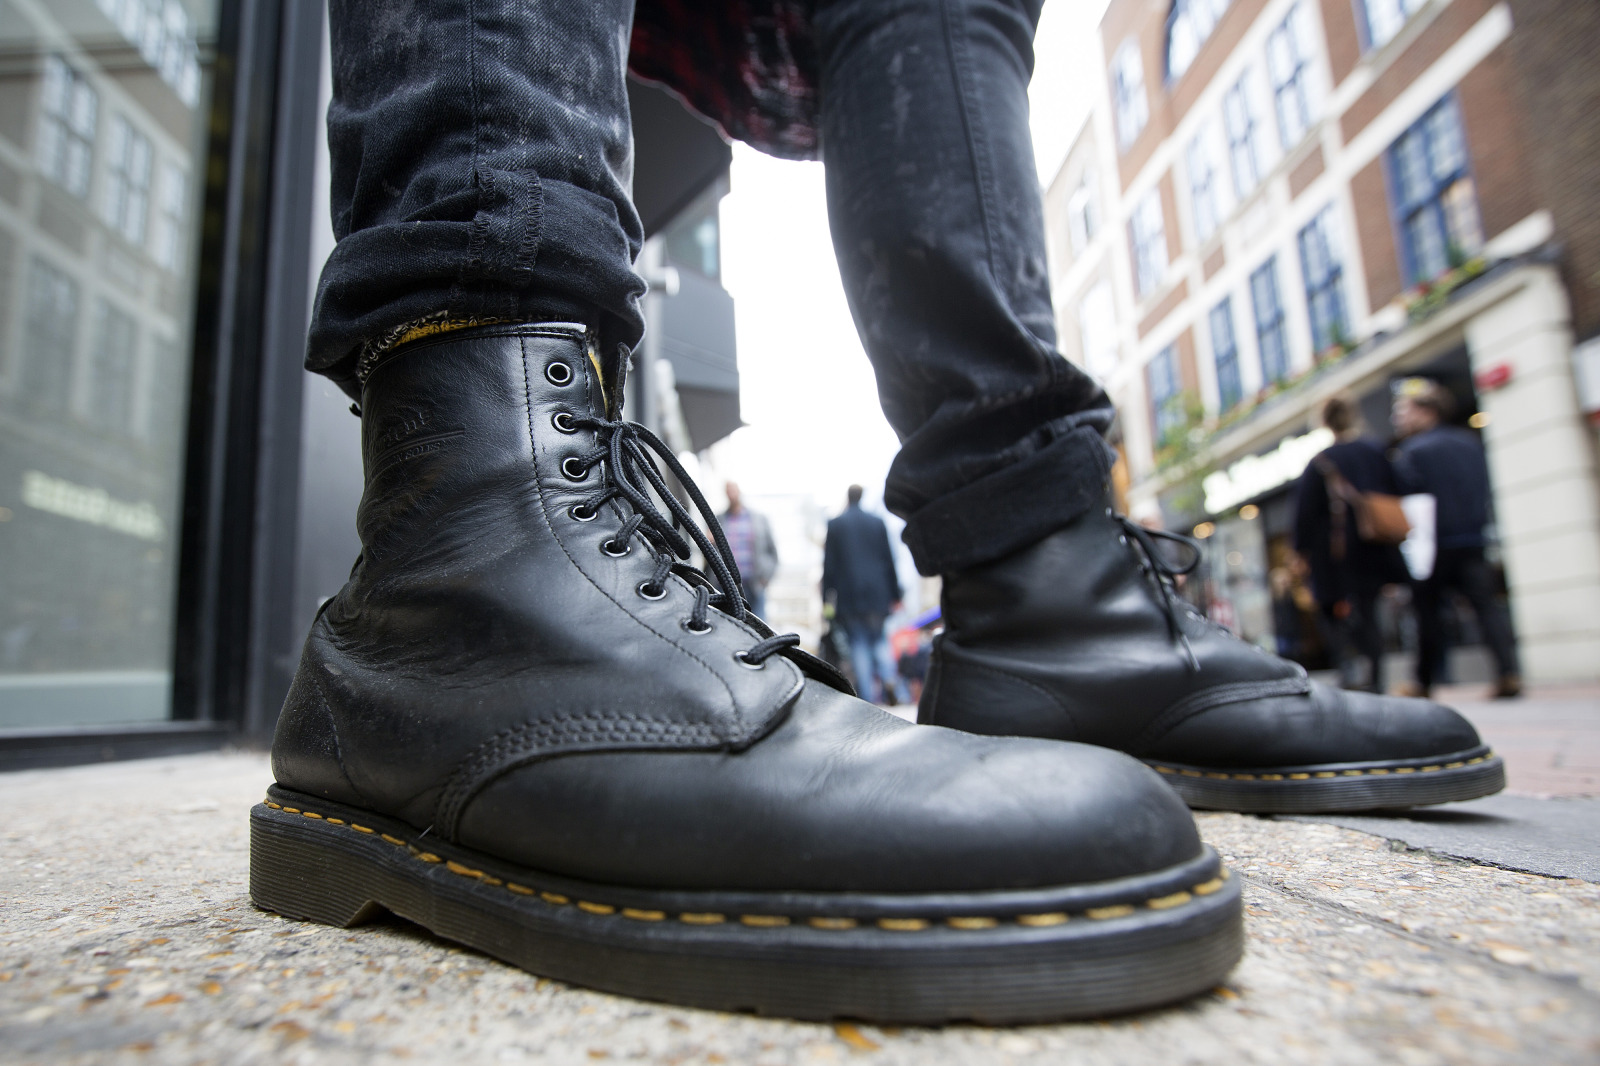 Bootmaker Dr. Martens Plans London Stock Offering - Bloomberg